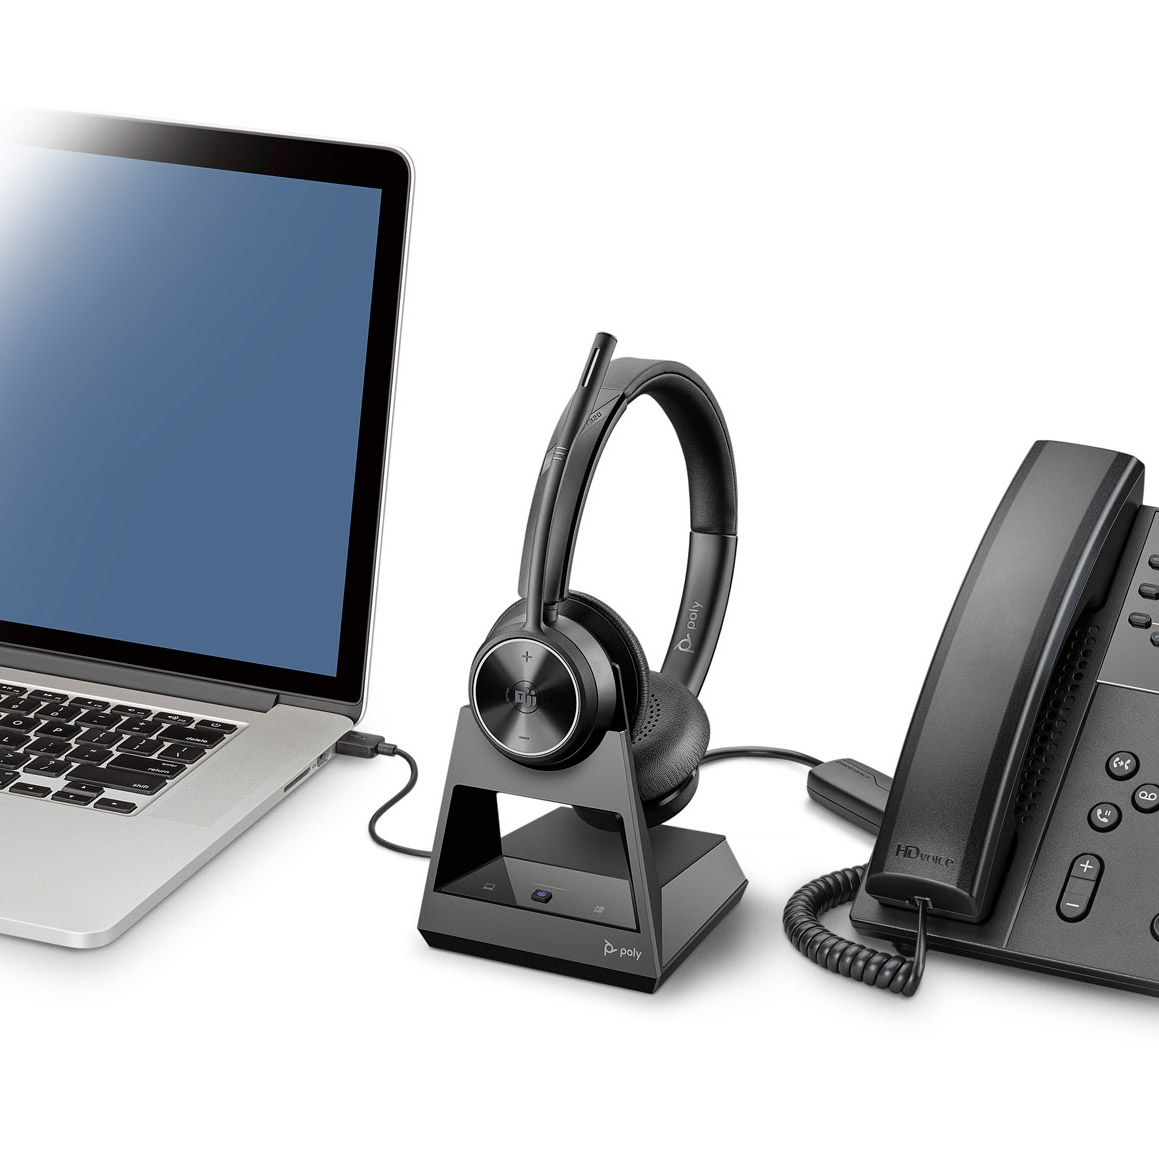 Deskphone and PC/laptop